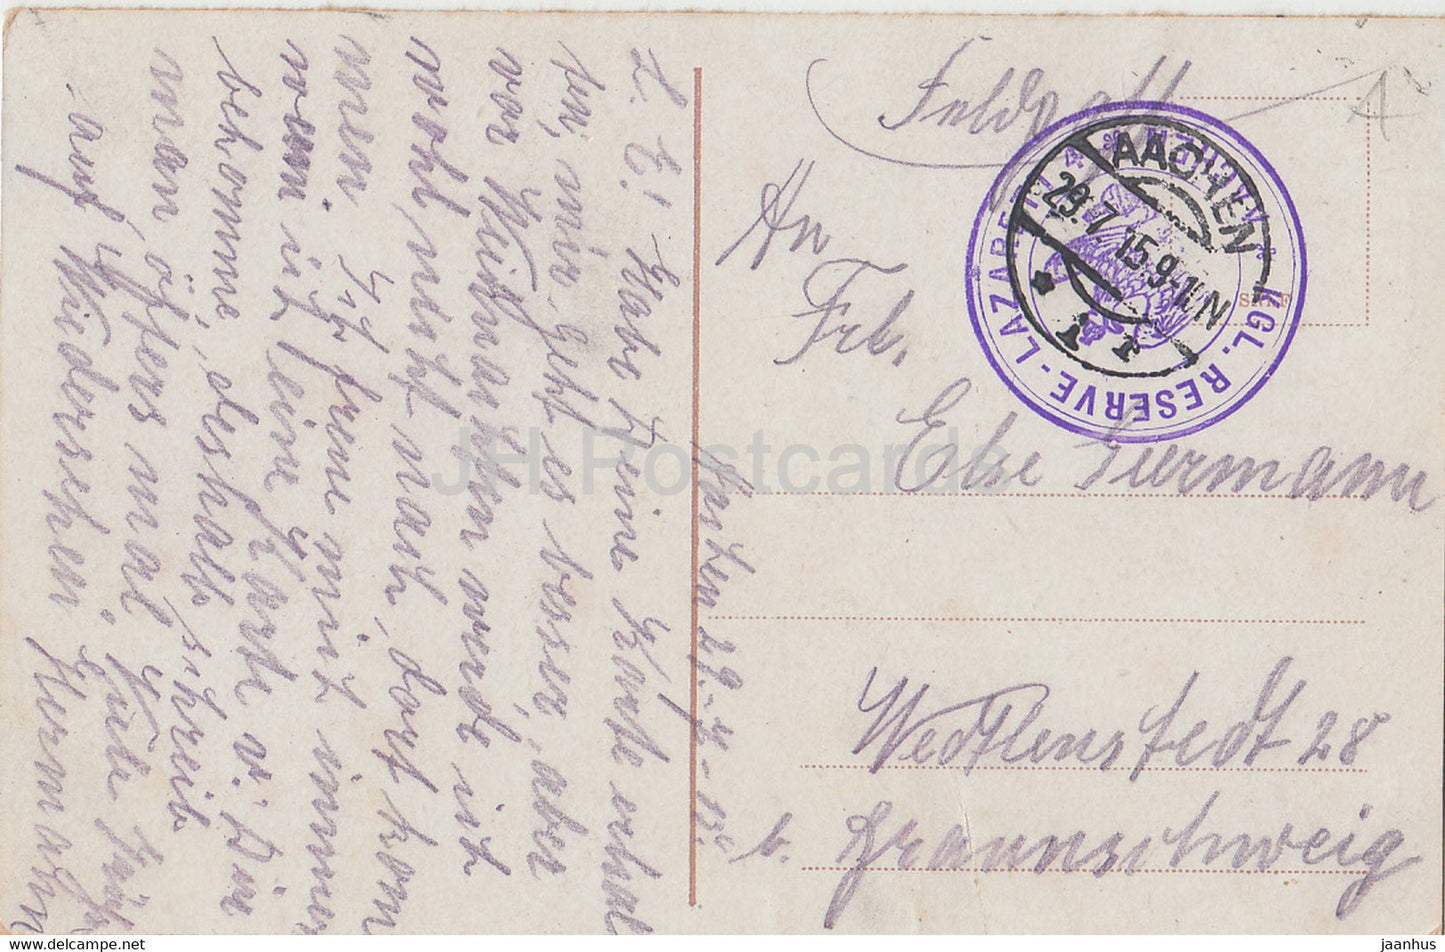 Aachen - Ponttor - Feldpost - old postcard - 1915 - Germany - used